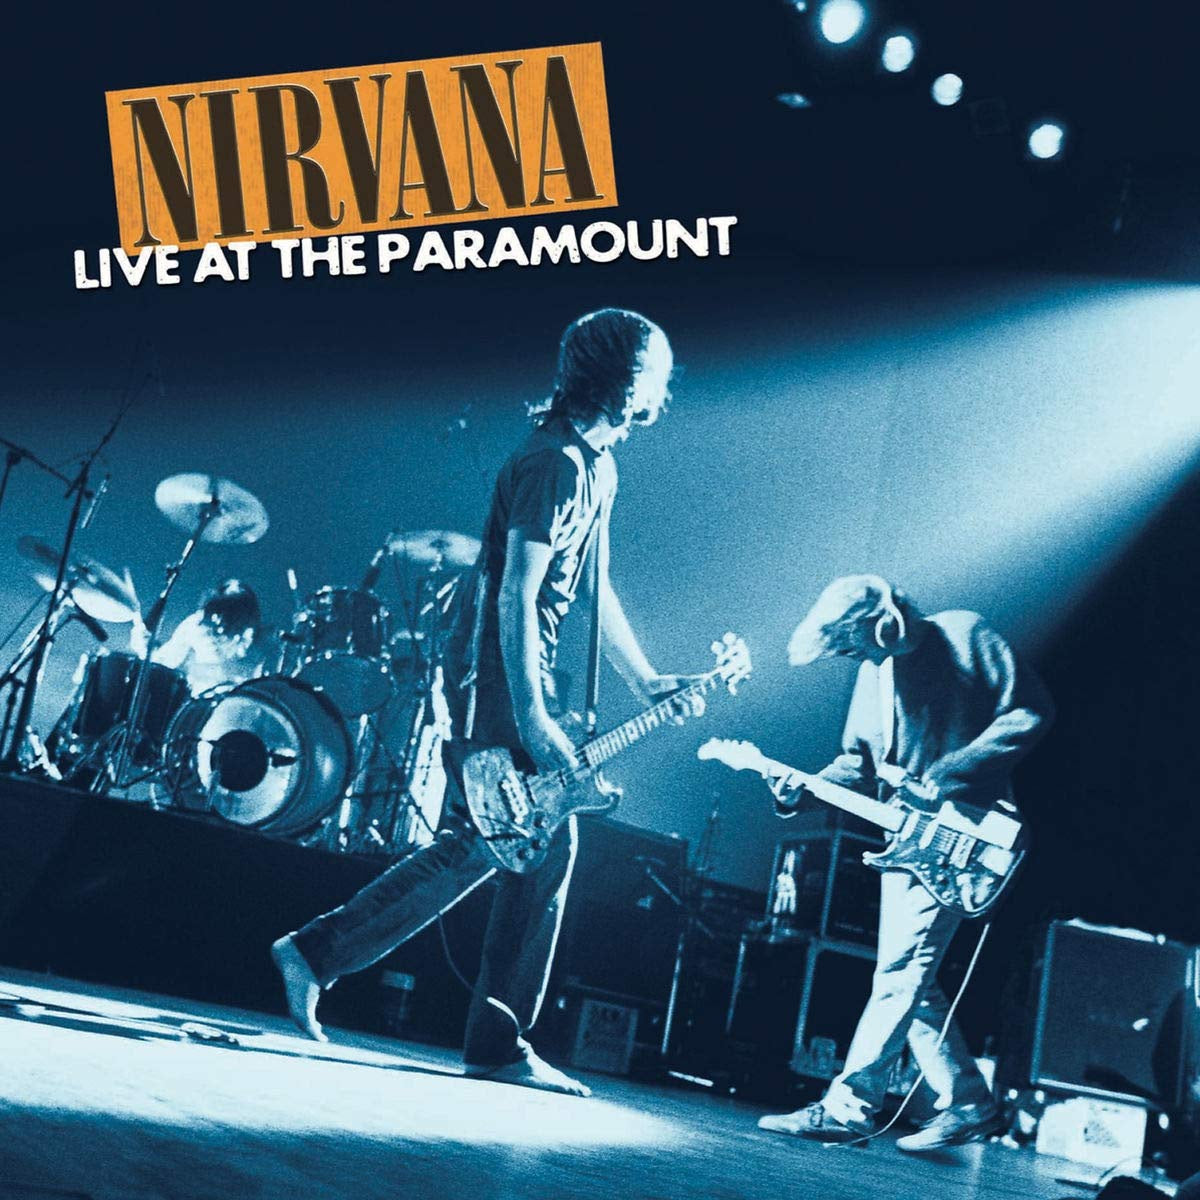 Nirvana - Live at The Paramount (1991) - New 2 Lp 2019 UMe 180gram Pressing - Alt-Rock / Grunge